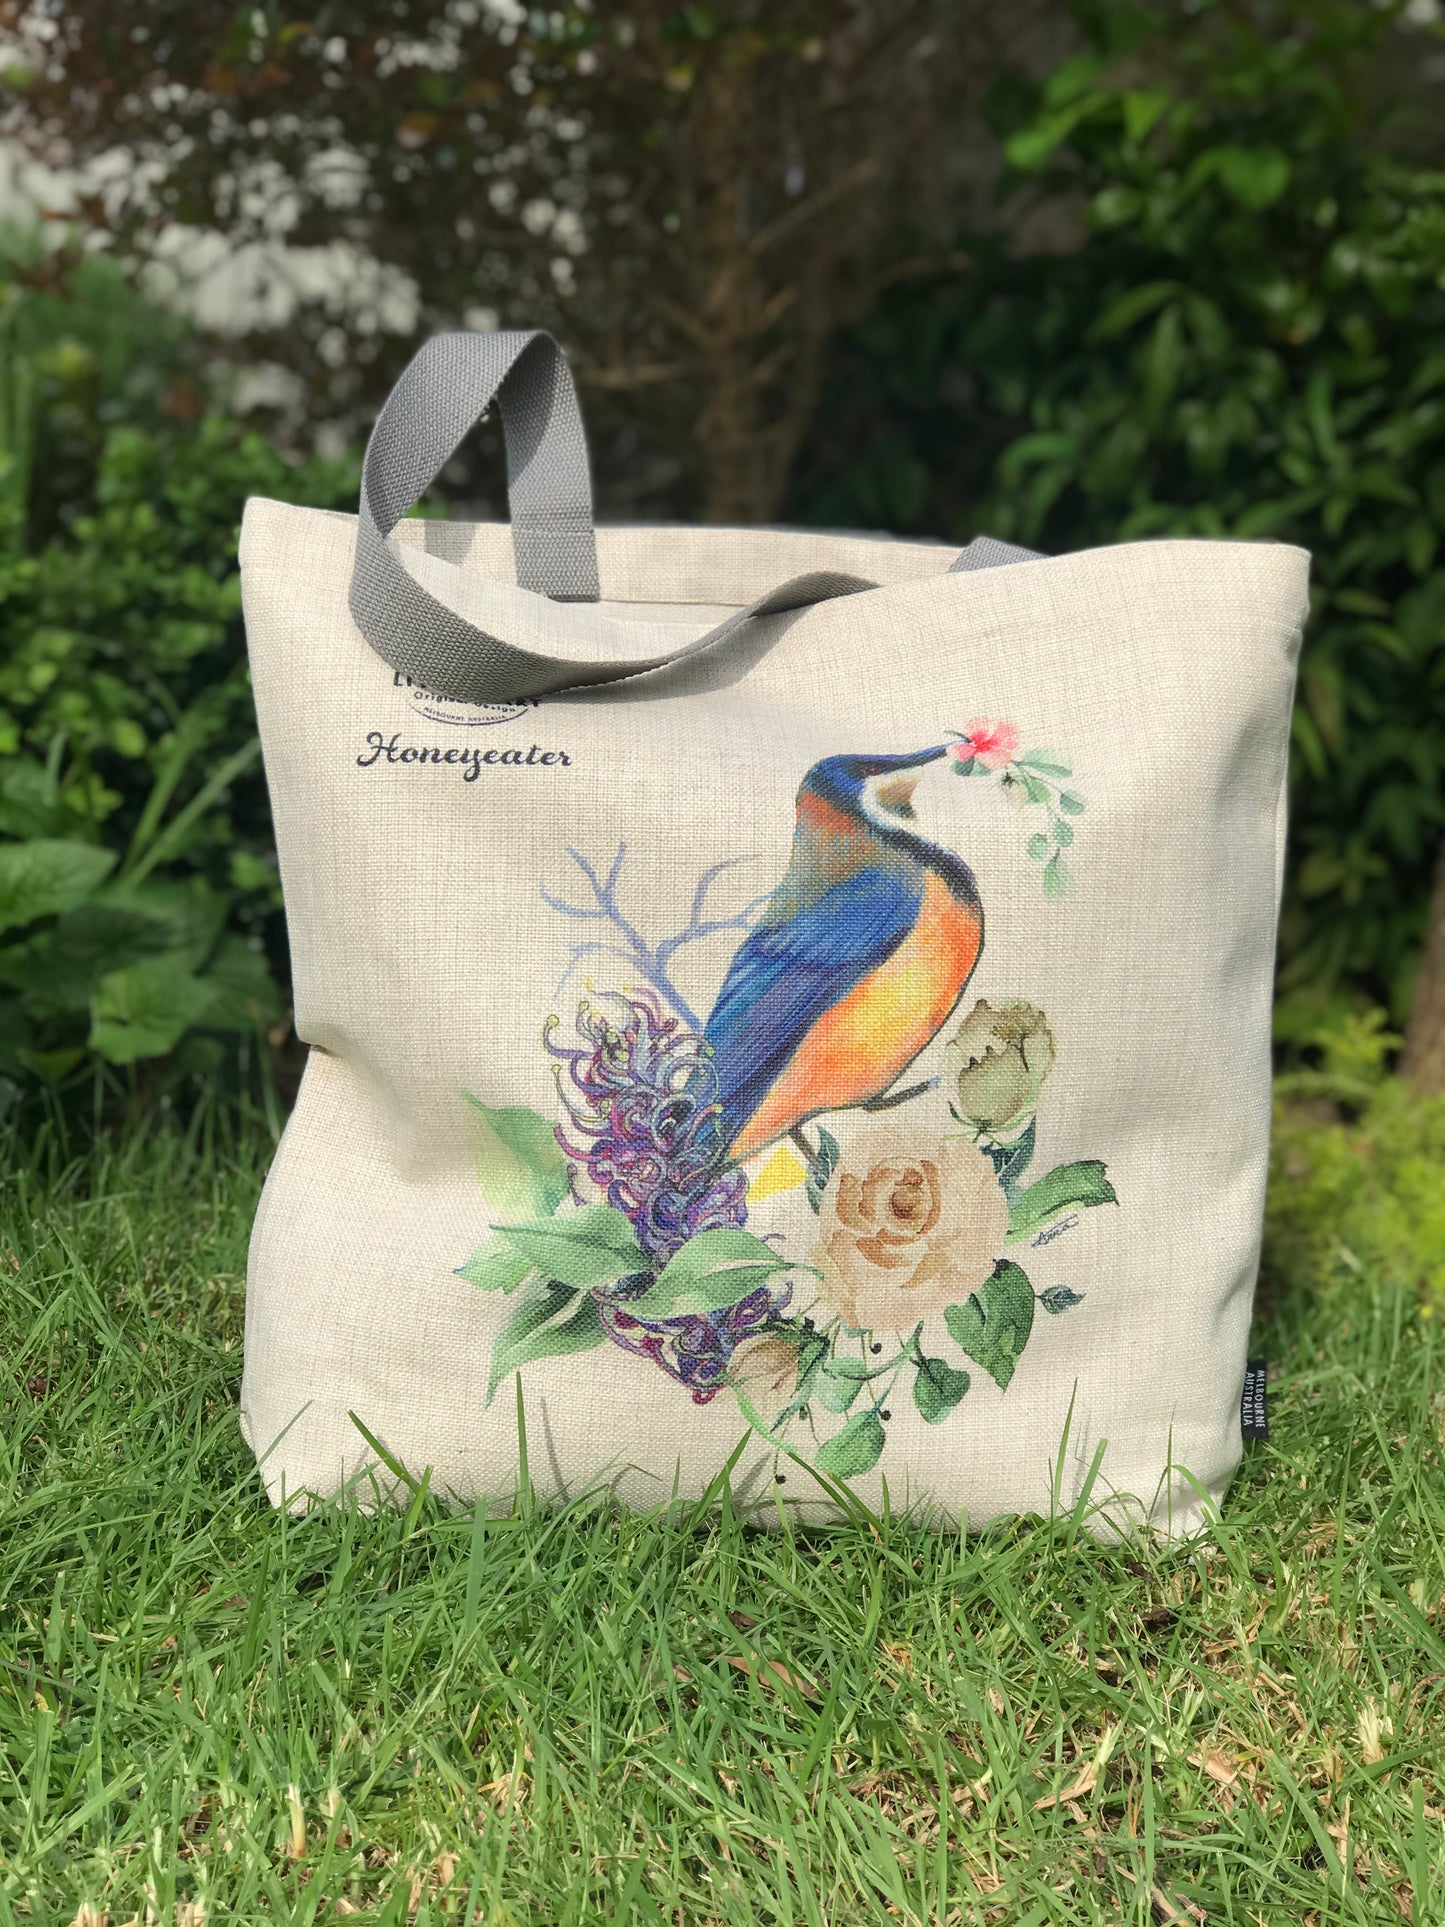 Honeyeater Tote bag,Art bag,Gift,Australian Bird